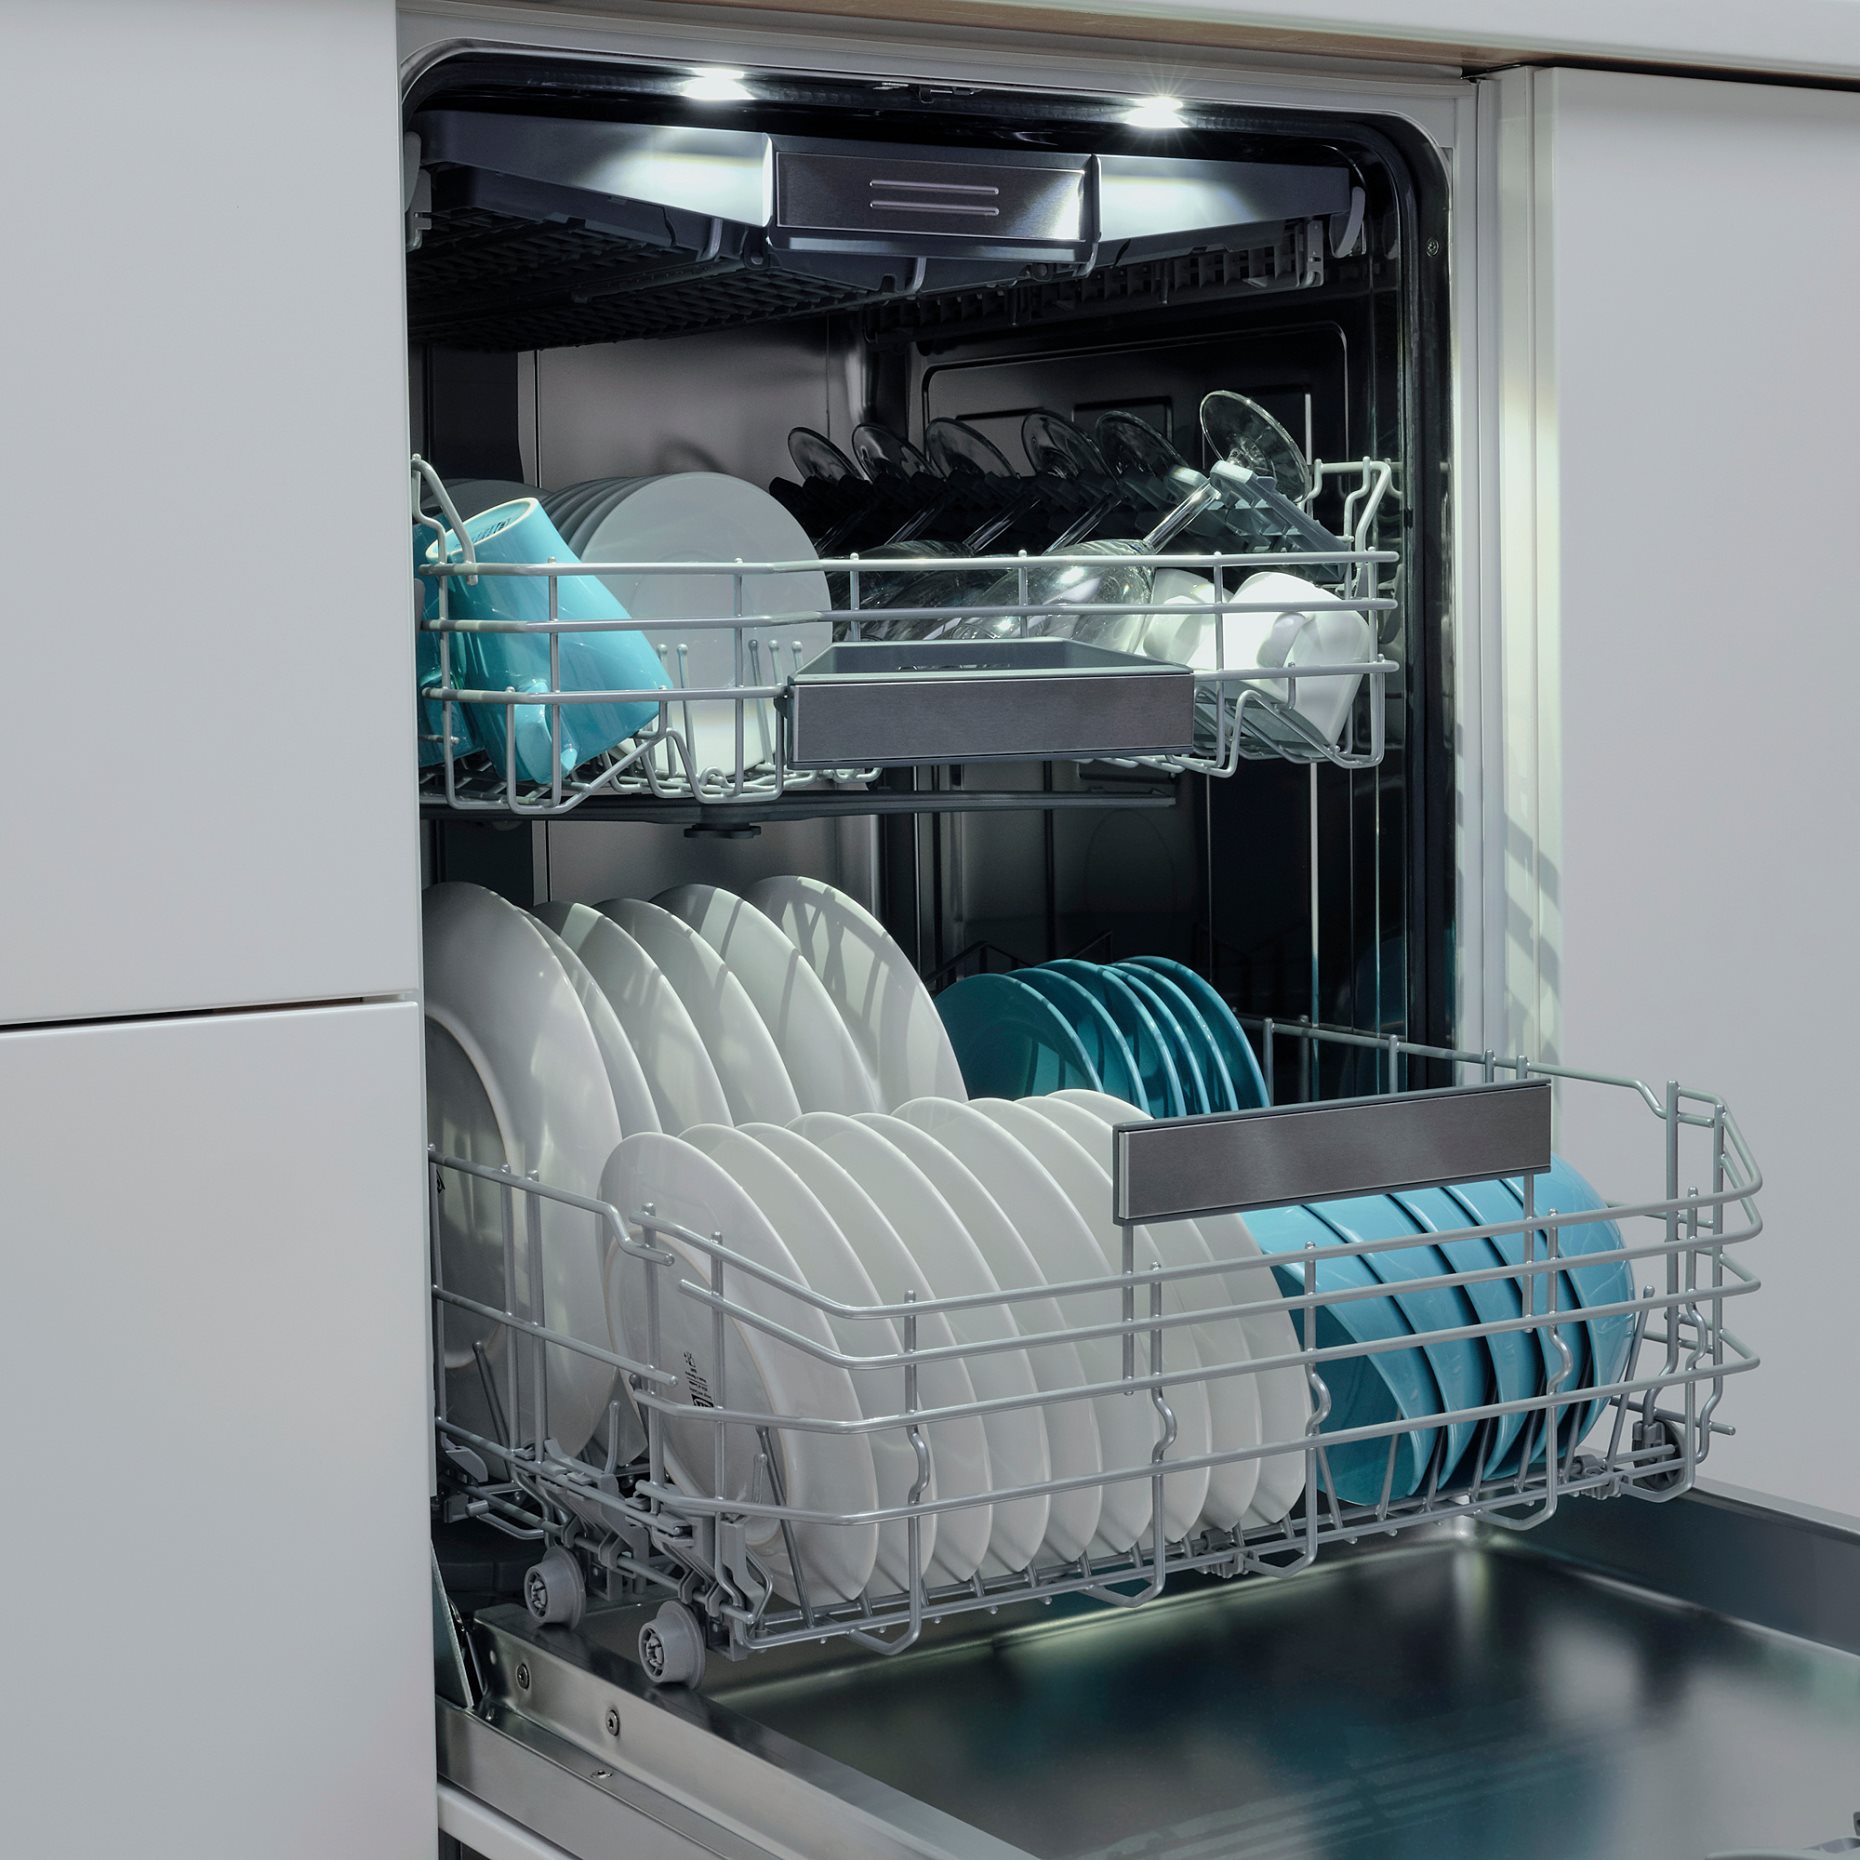 PROFFSIG, 700 integrated dishwasher, 404.754.21